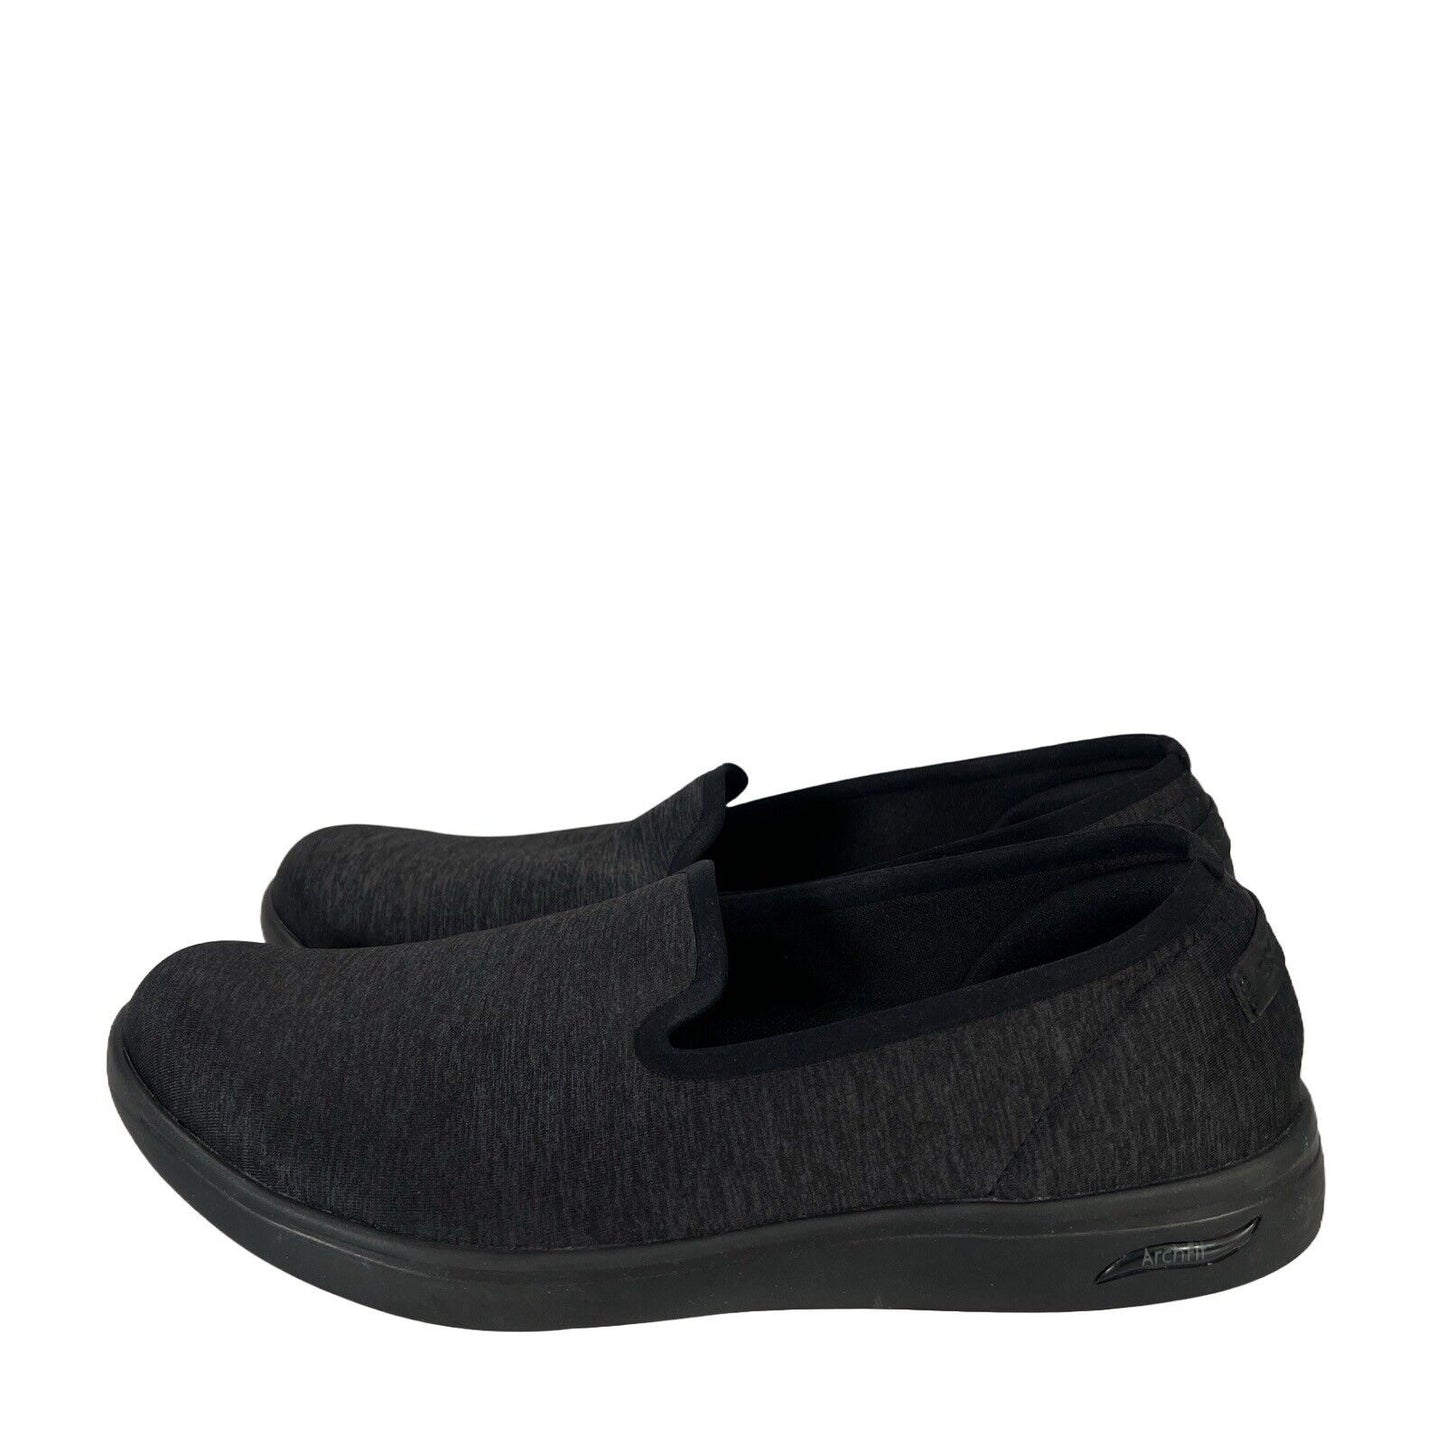 Skechers Women's Black Arch Fit Uplift Slip On Comfort Loafer Flats - 9